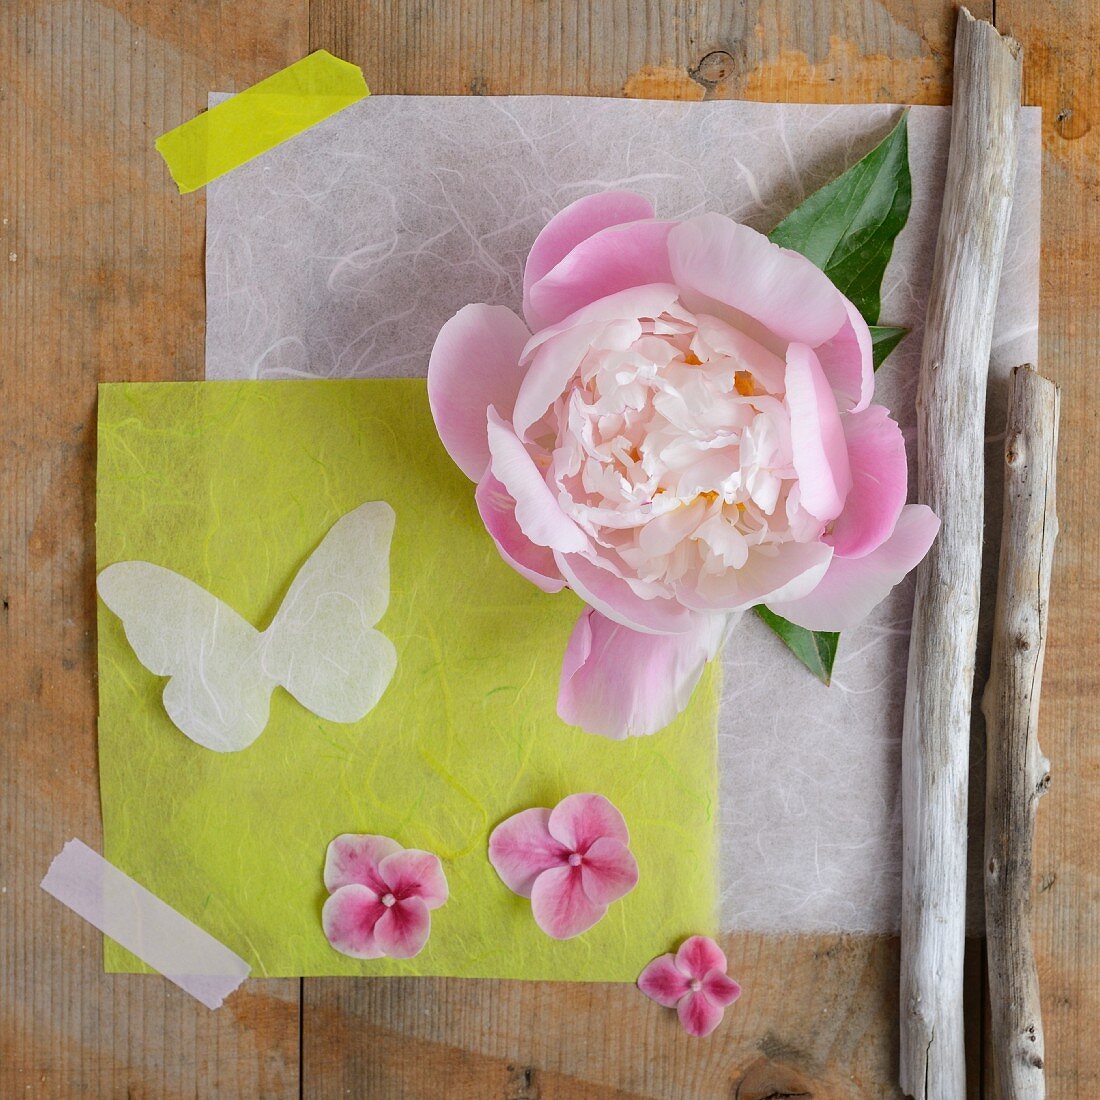 Pfingstrose, Papierblätter, Papierschmetterling, rosa Blüten und Äste